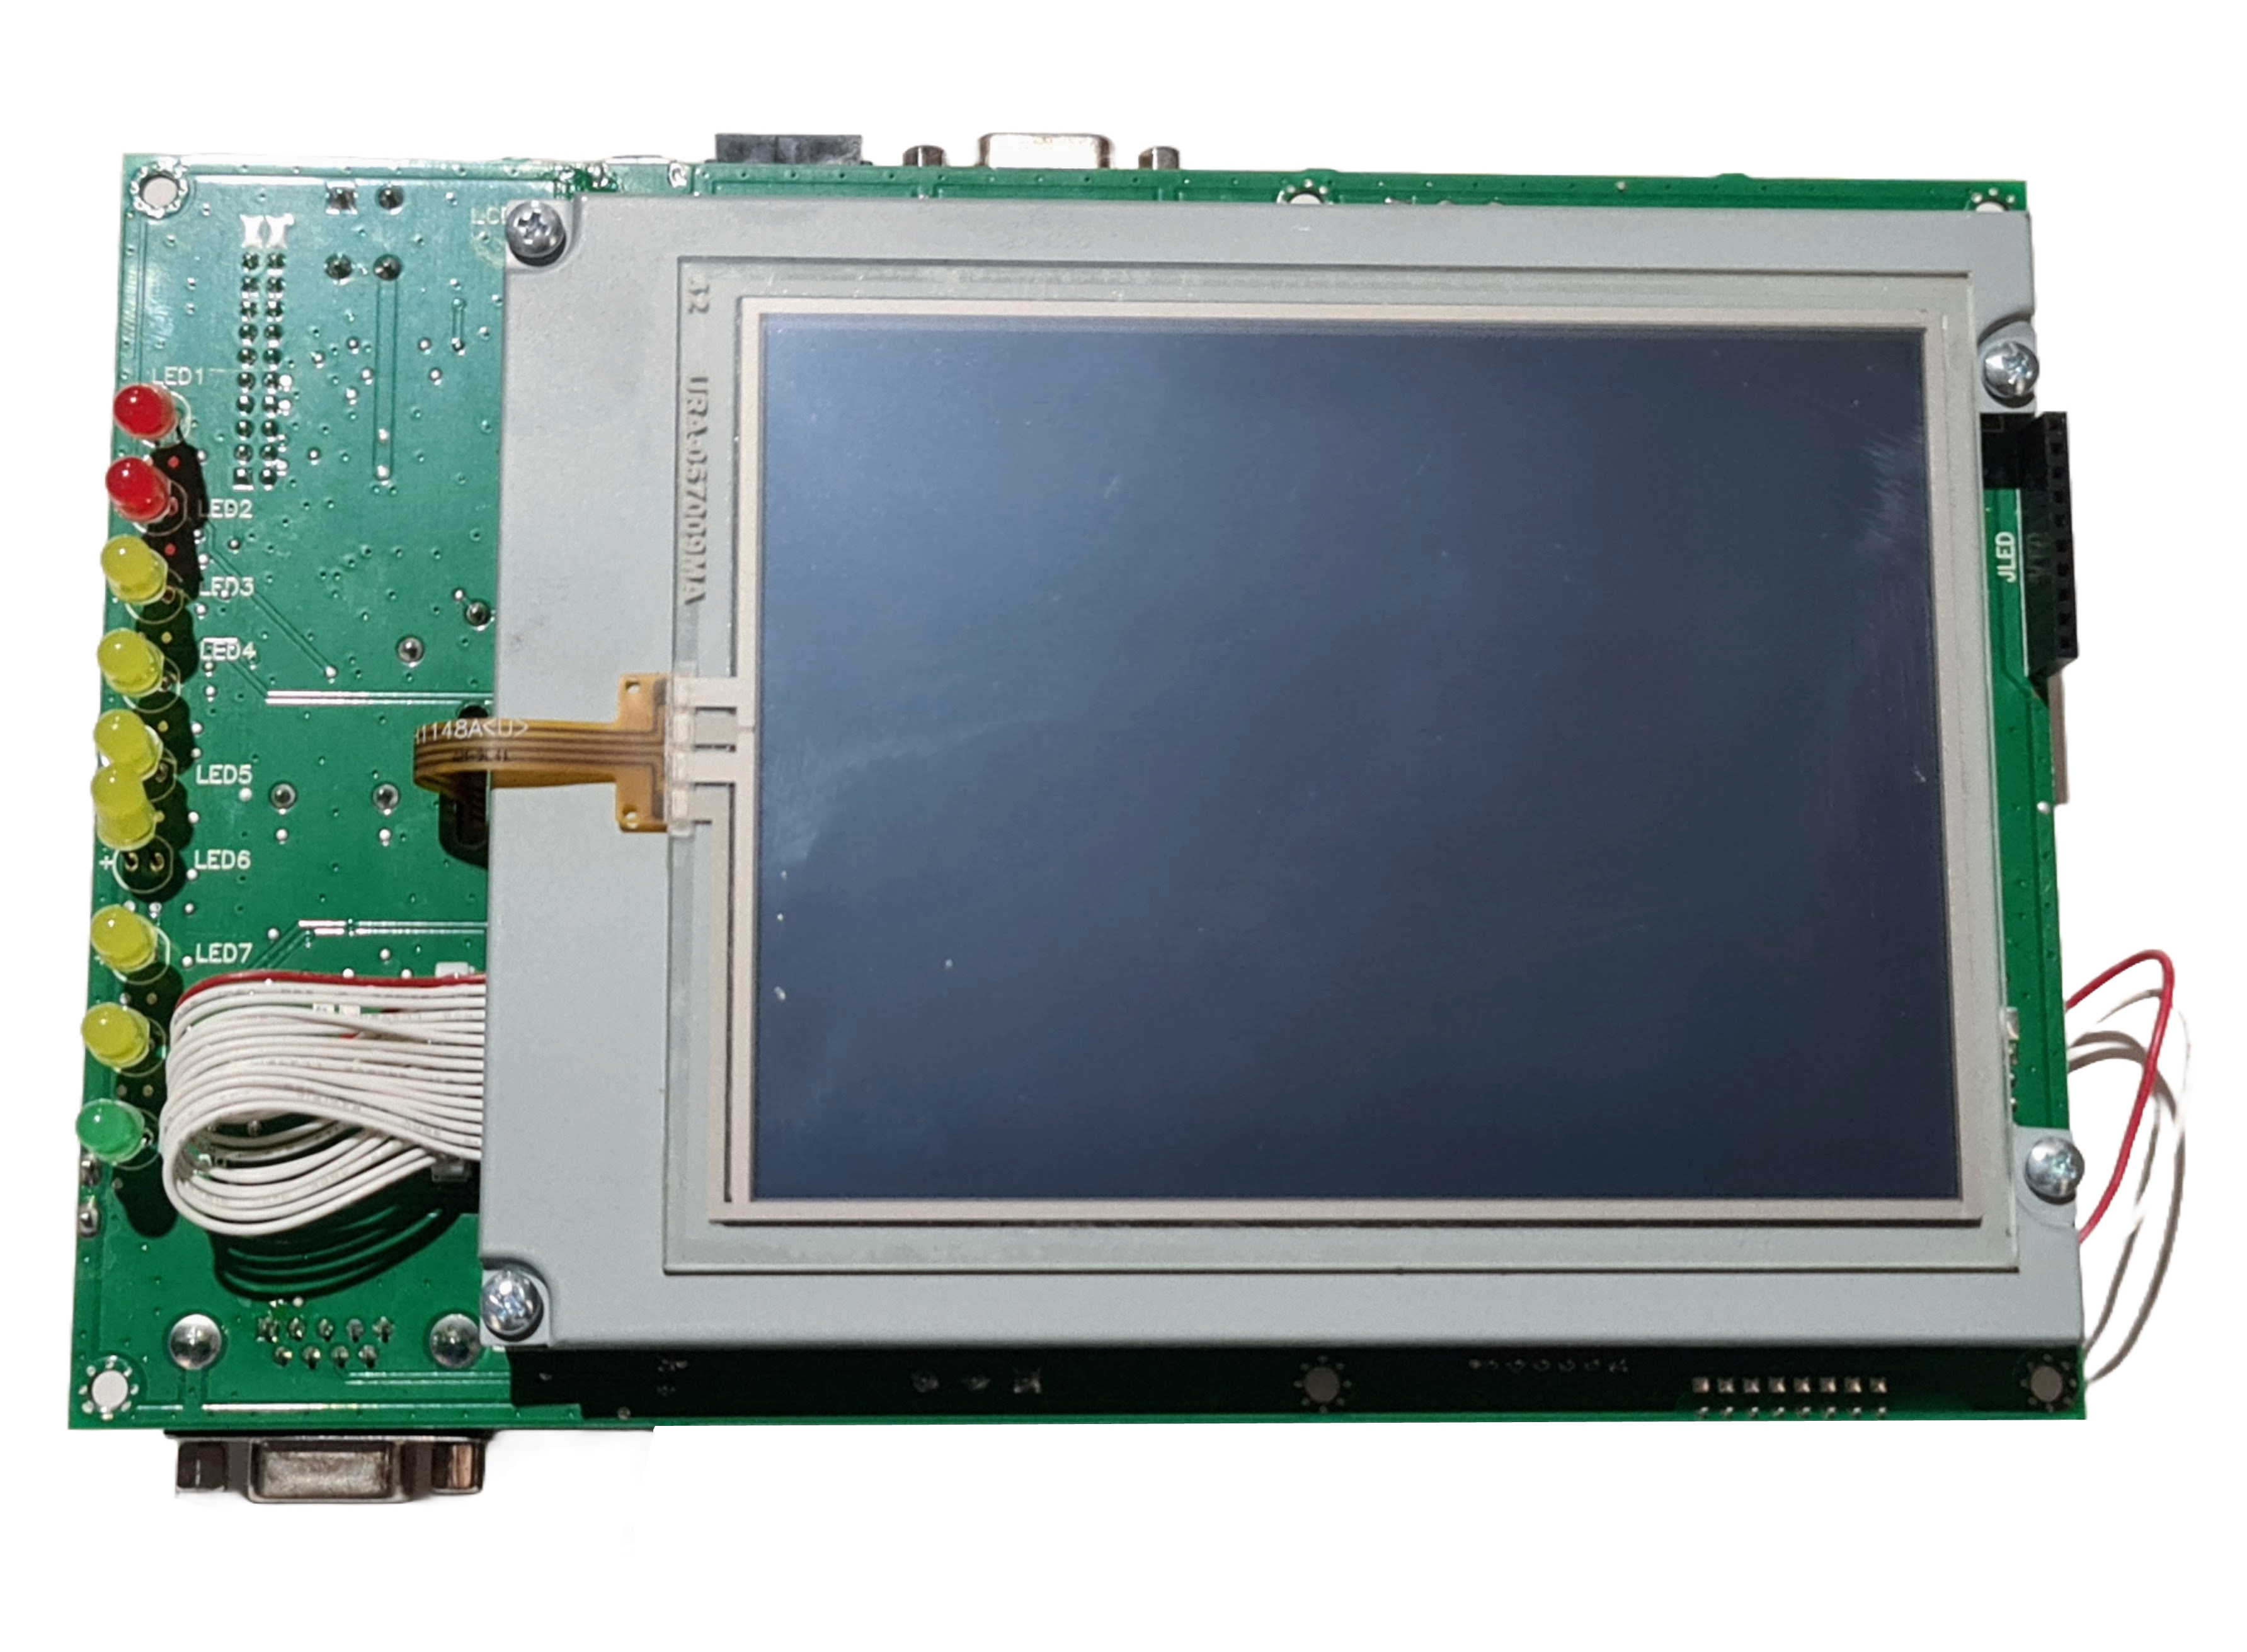 30050054 Module IRIS front panel incl B&W LCD+LED+IRIS 4 uPC module